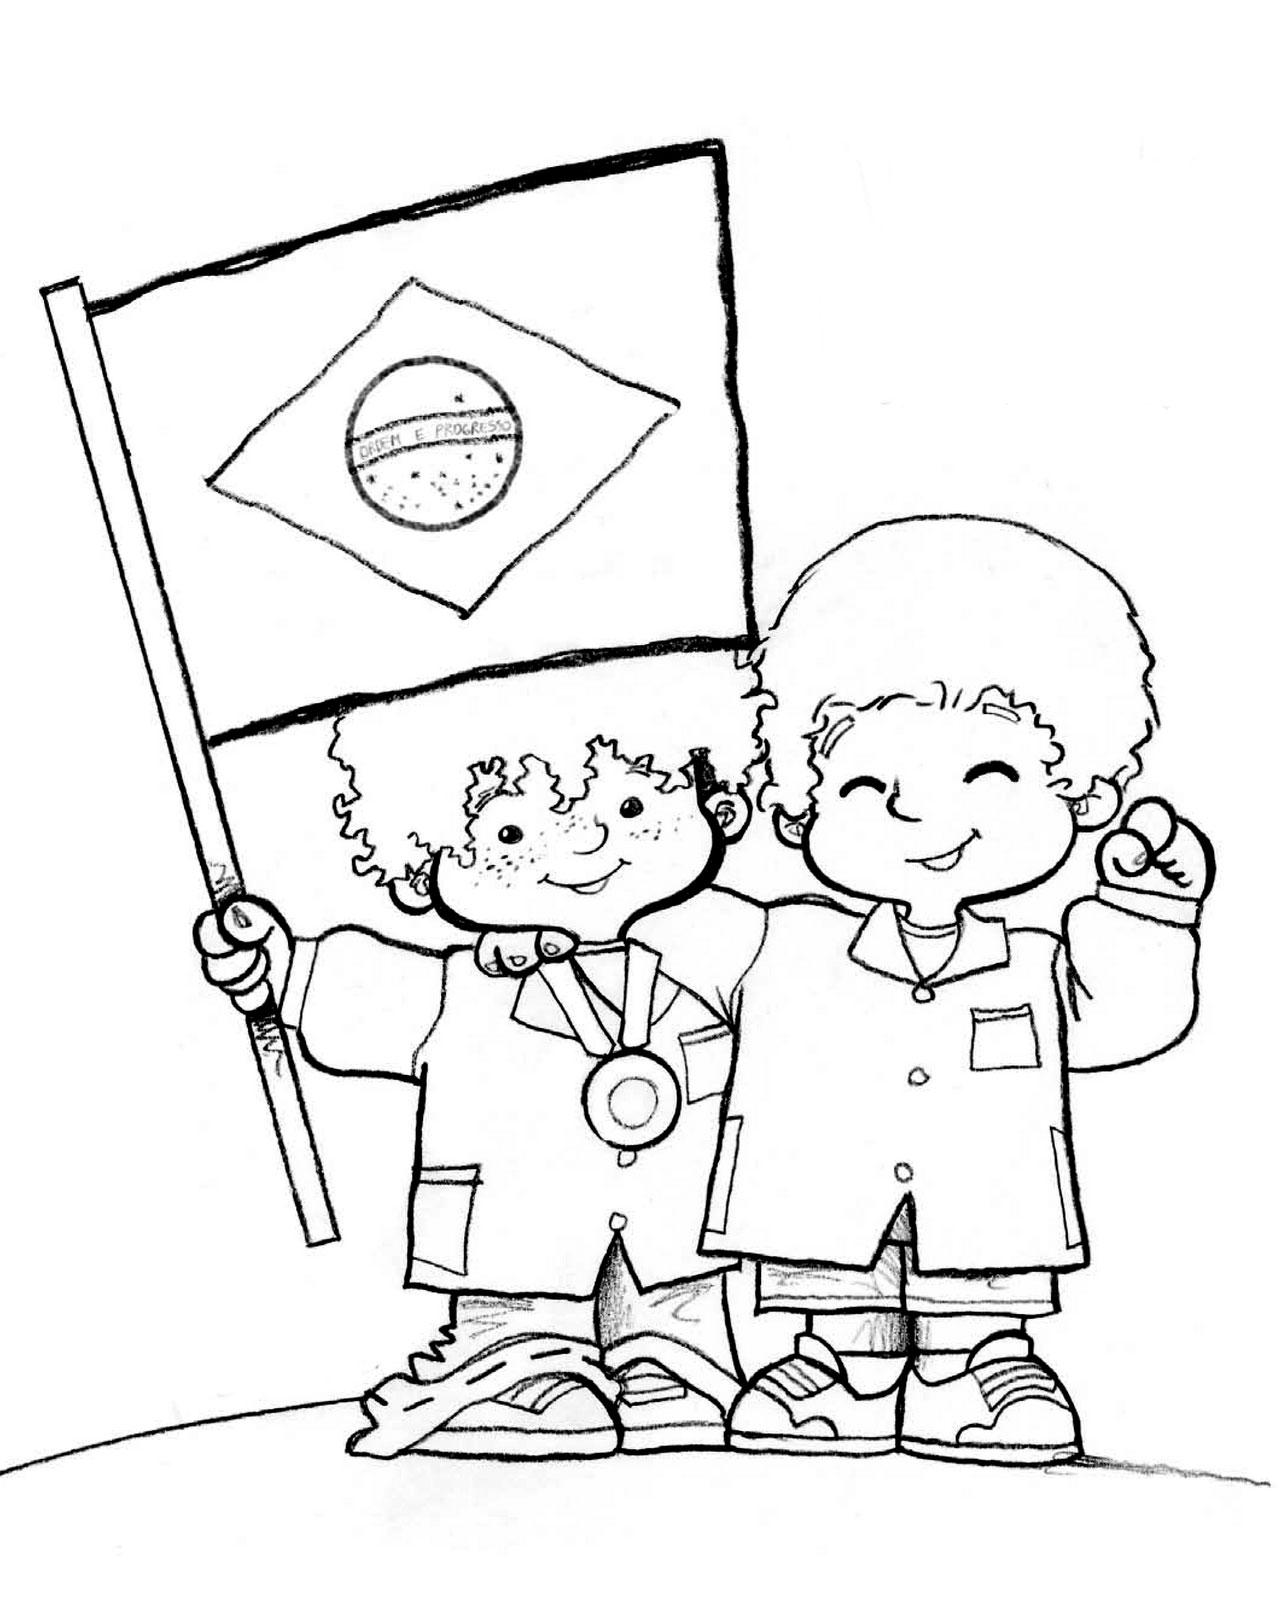 Desenho de Meninos e Bandeira do Brasil para colorir - Tudodesenhos